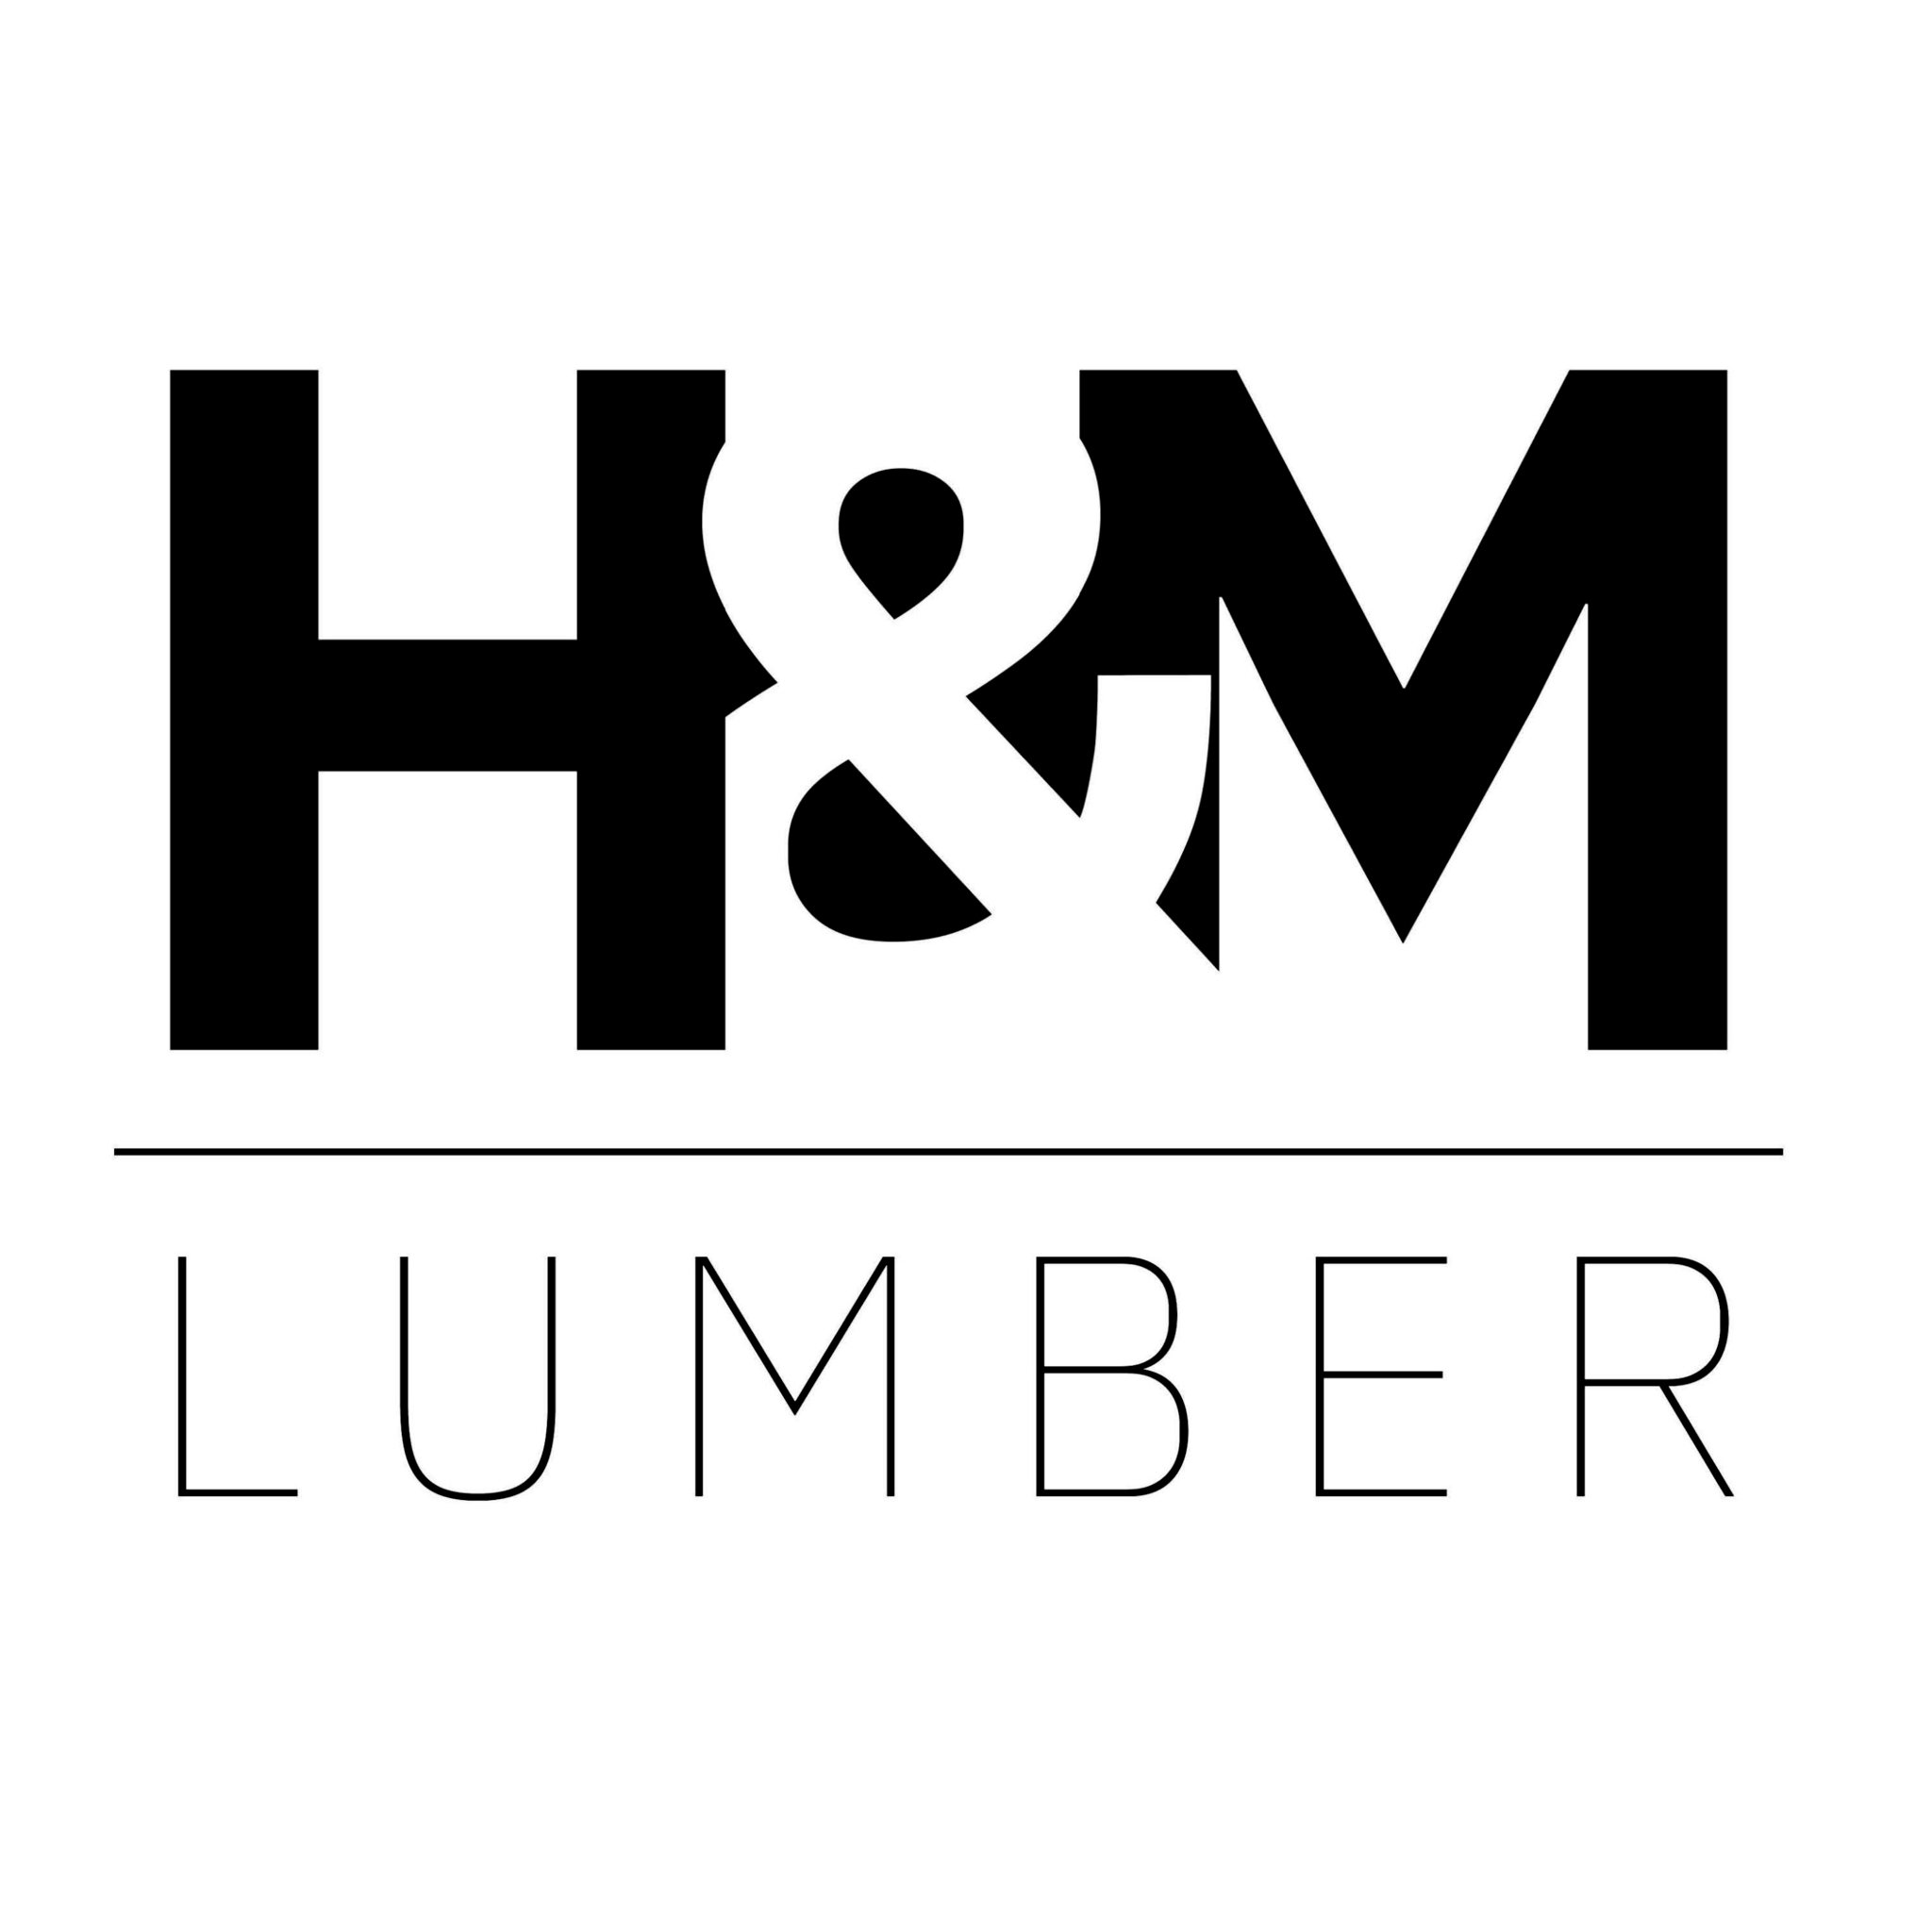 H&M Lumber - Entrepôts frigorifiques